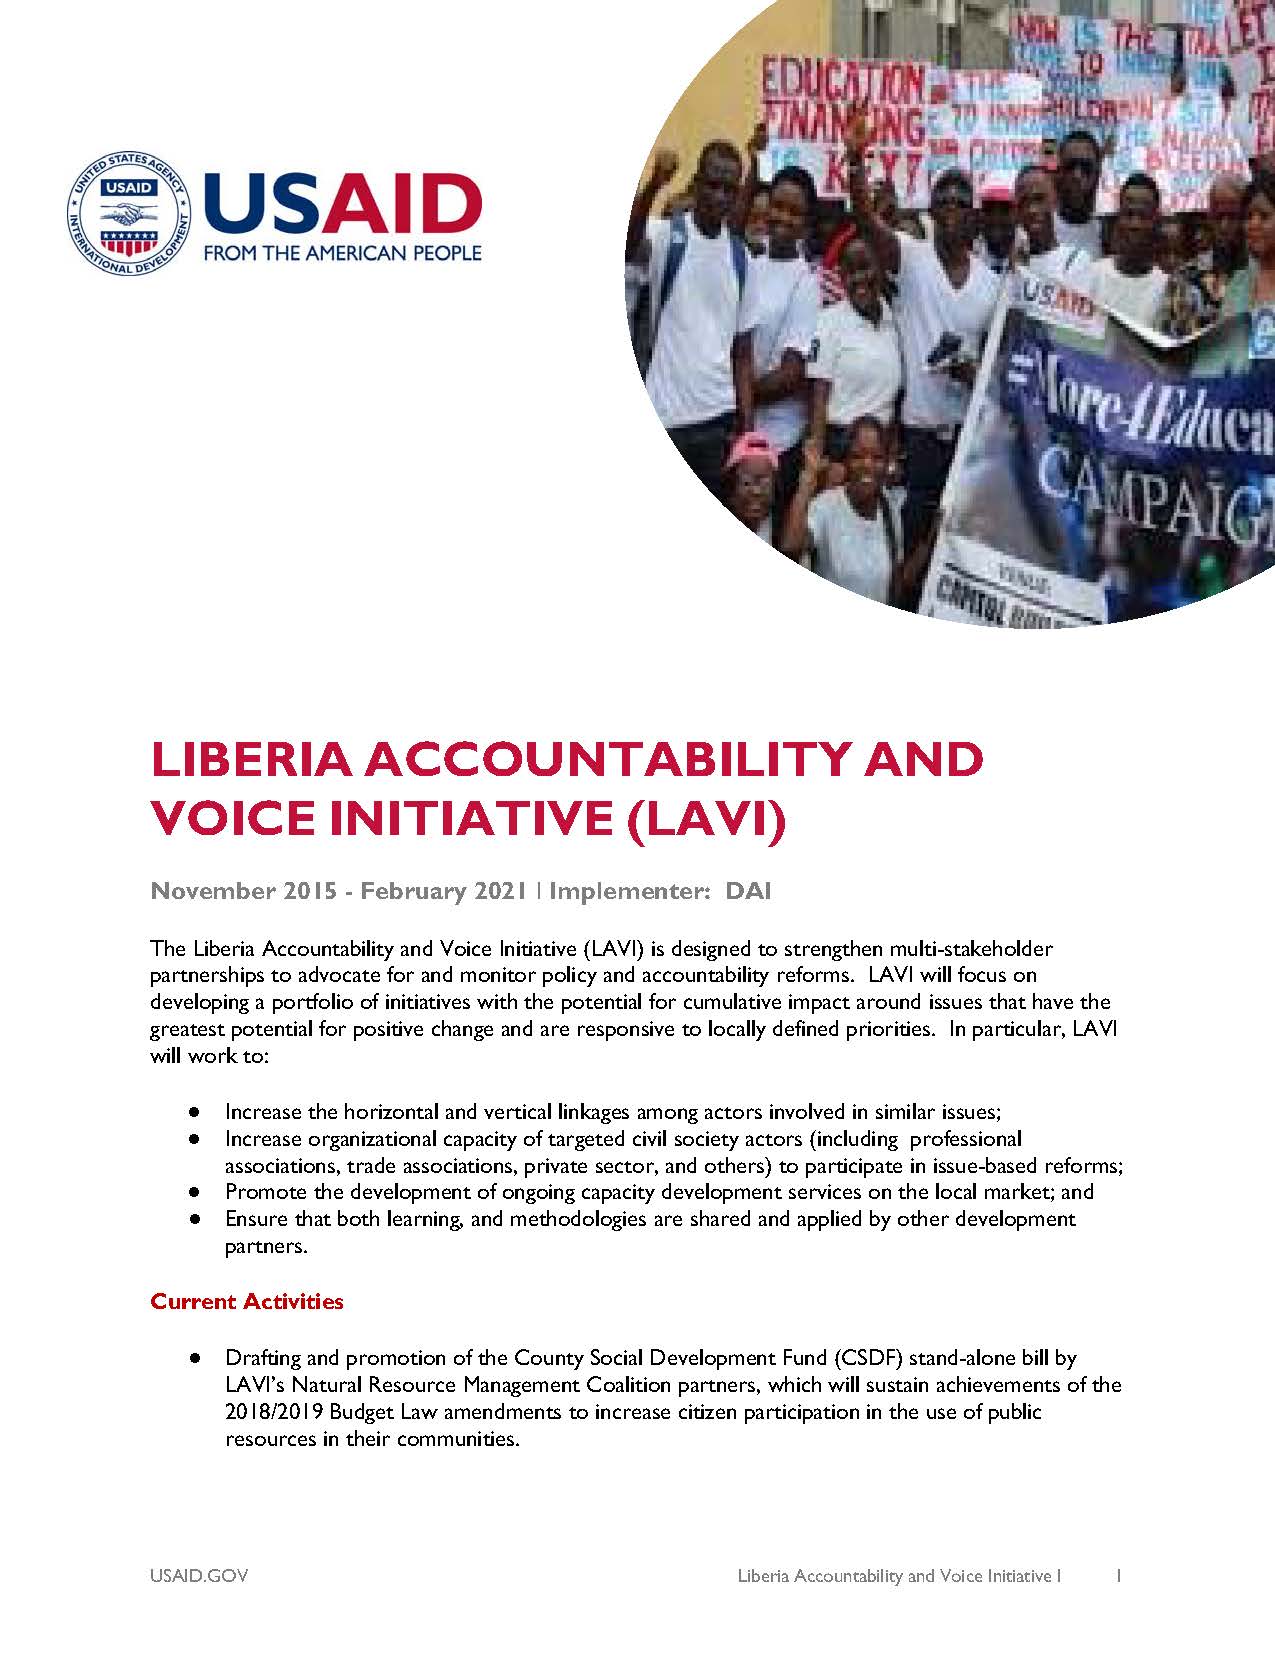 Liberia Accountability and Voice Initiative 